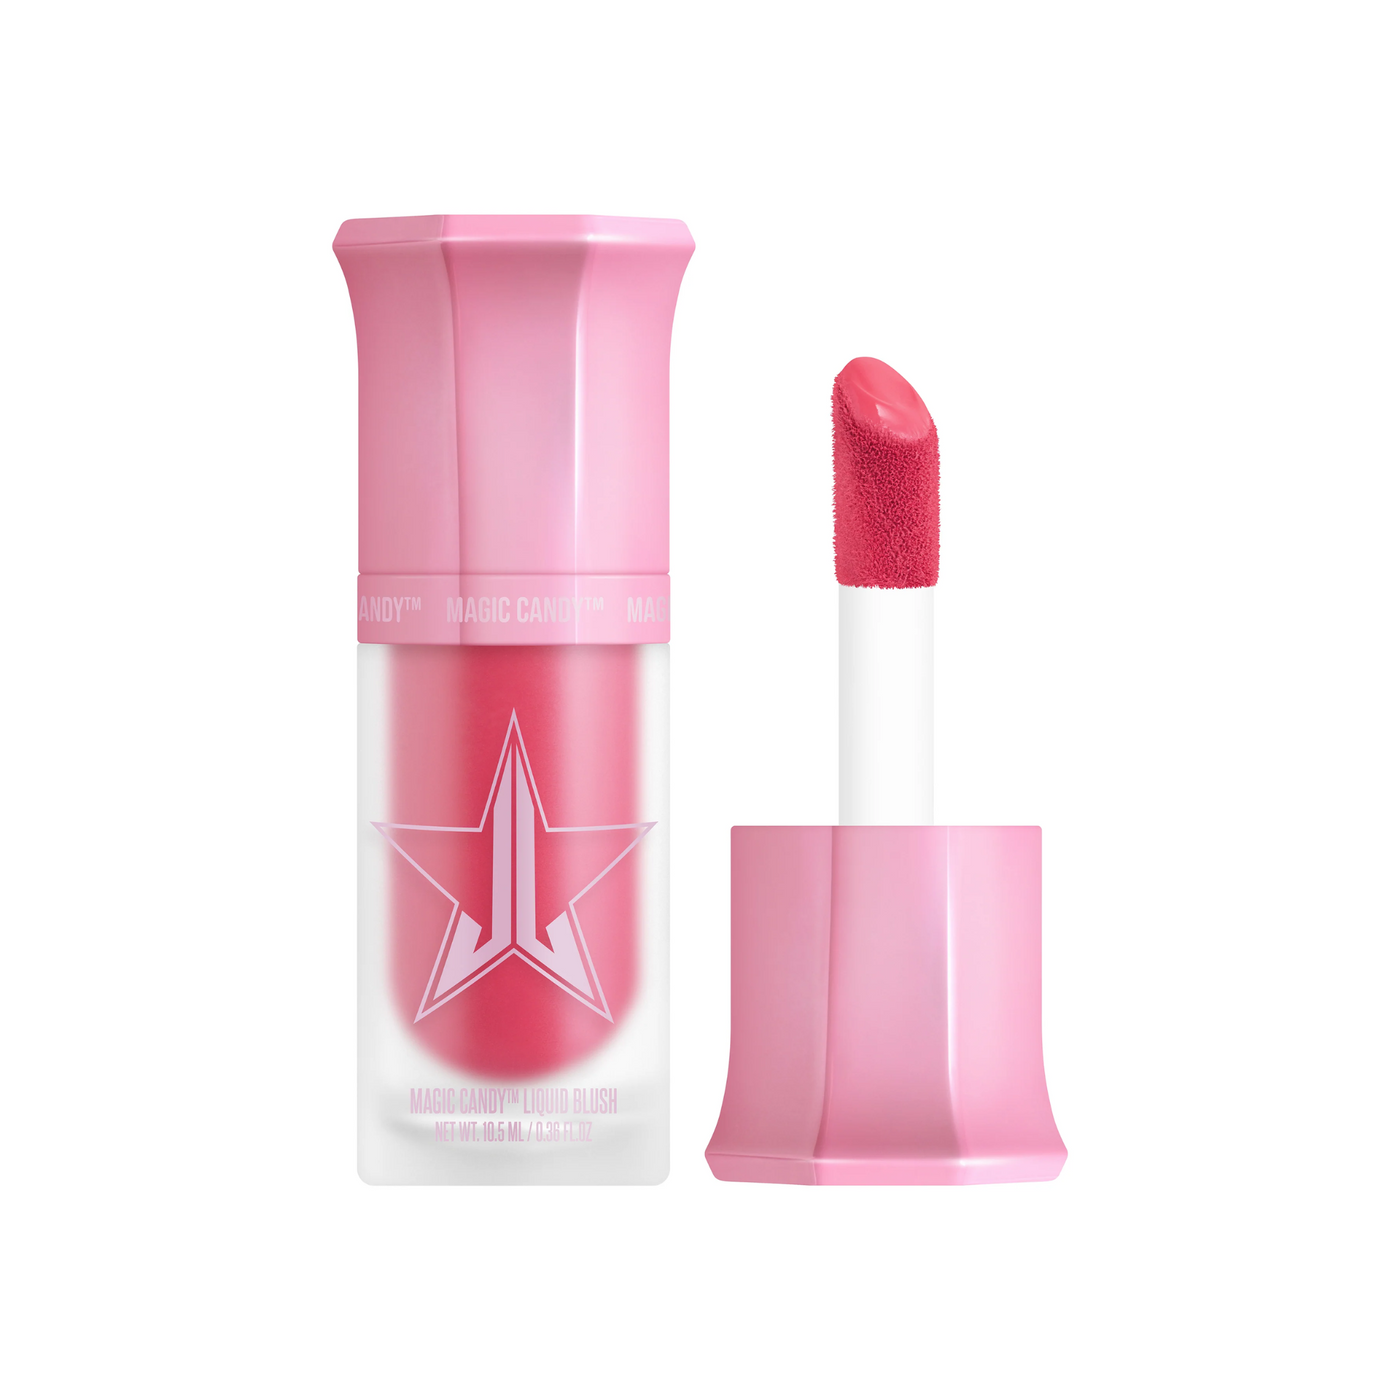 Jeffree Star Cosmetics - Magic Candy Liquid Blush